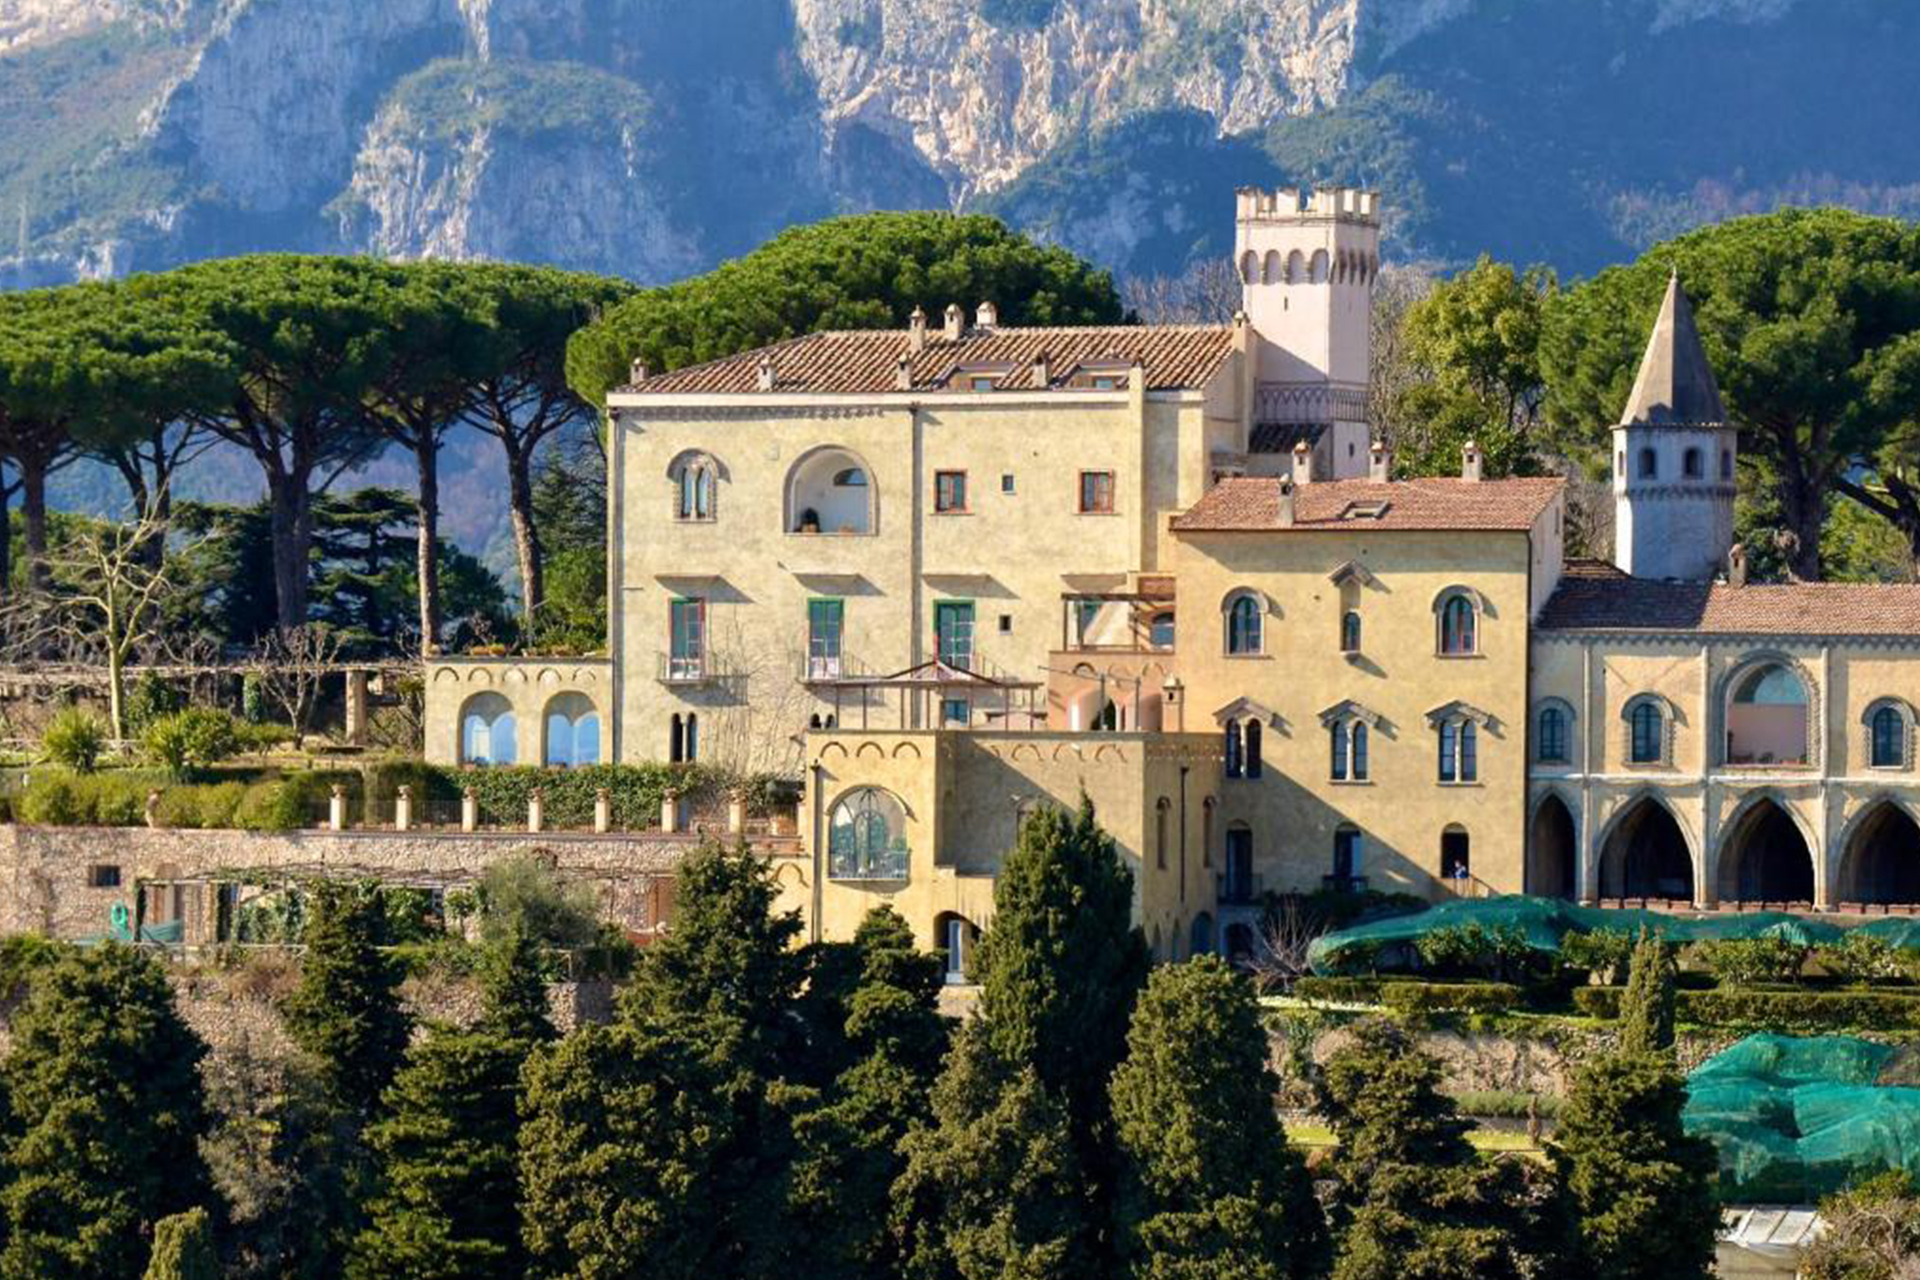 Villa Cimbrone: A Wedding Videographer’s Heaven on the Amalfi Coast